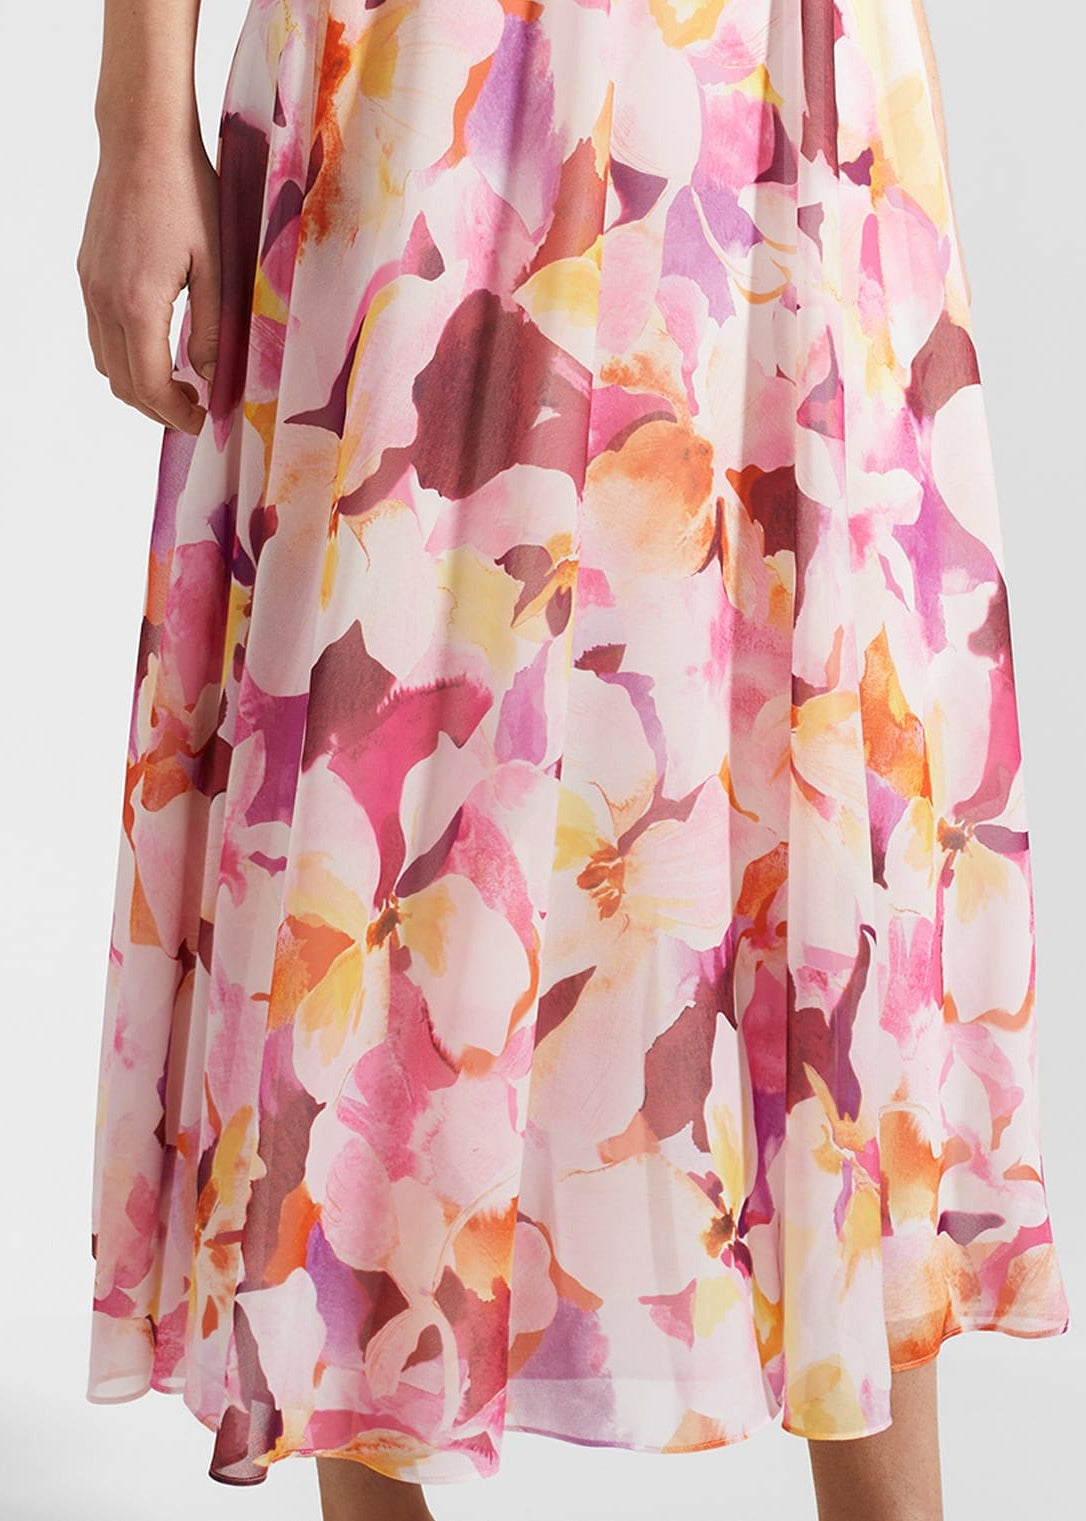 Carly Dress 0124/5675/9022l00 Pink-Multi